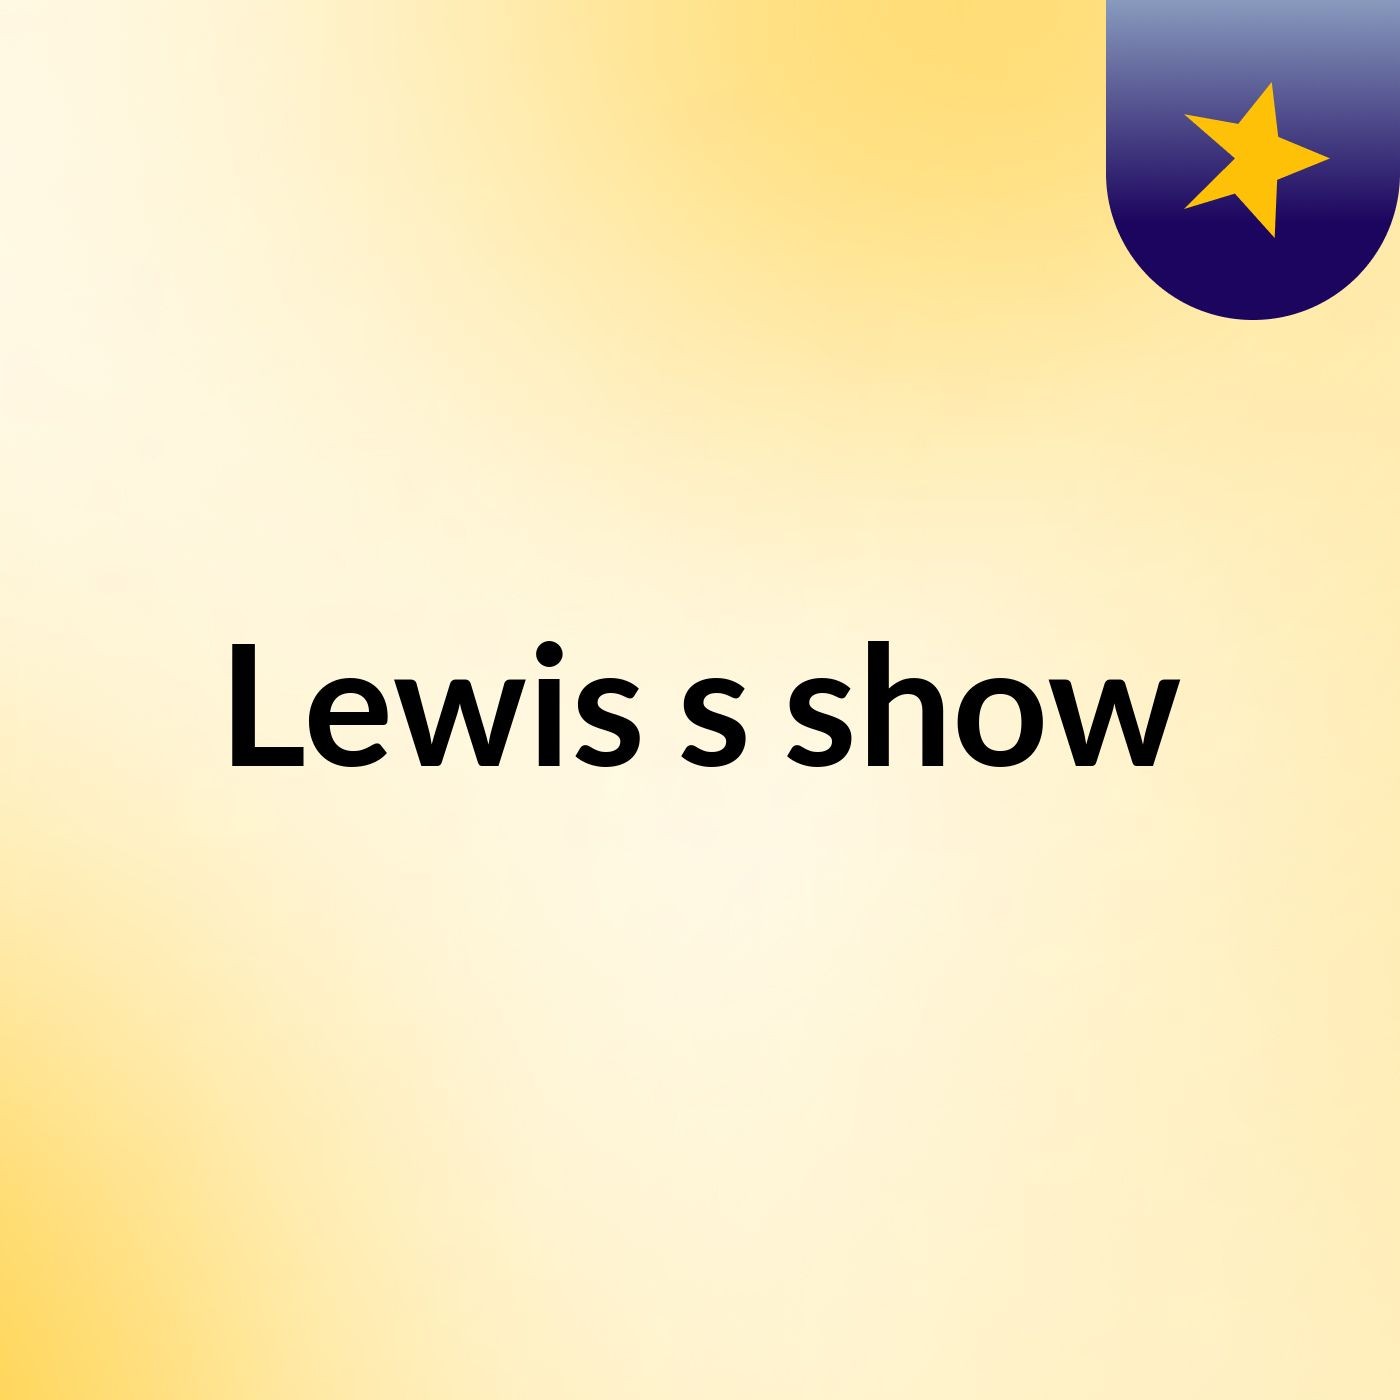 Lewis's show